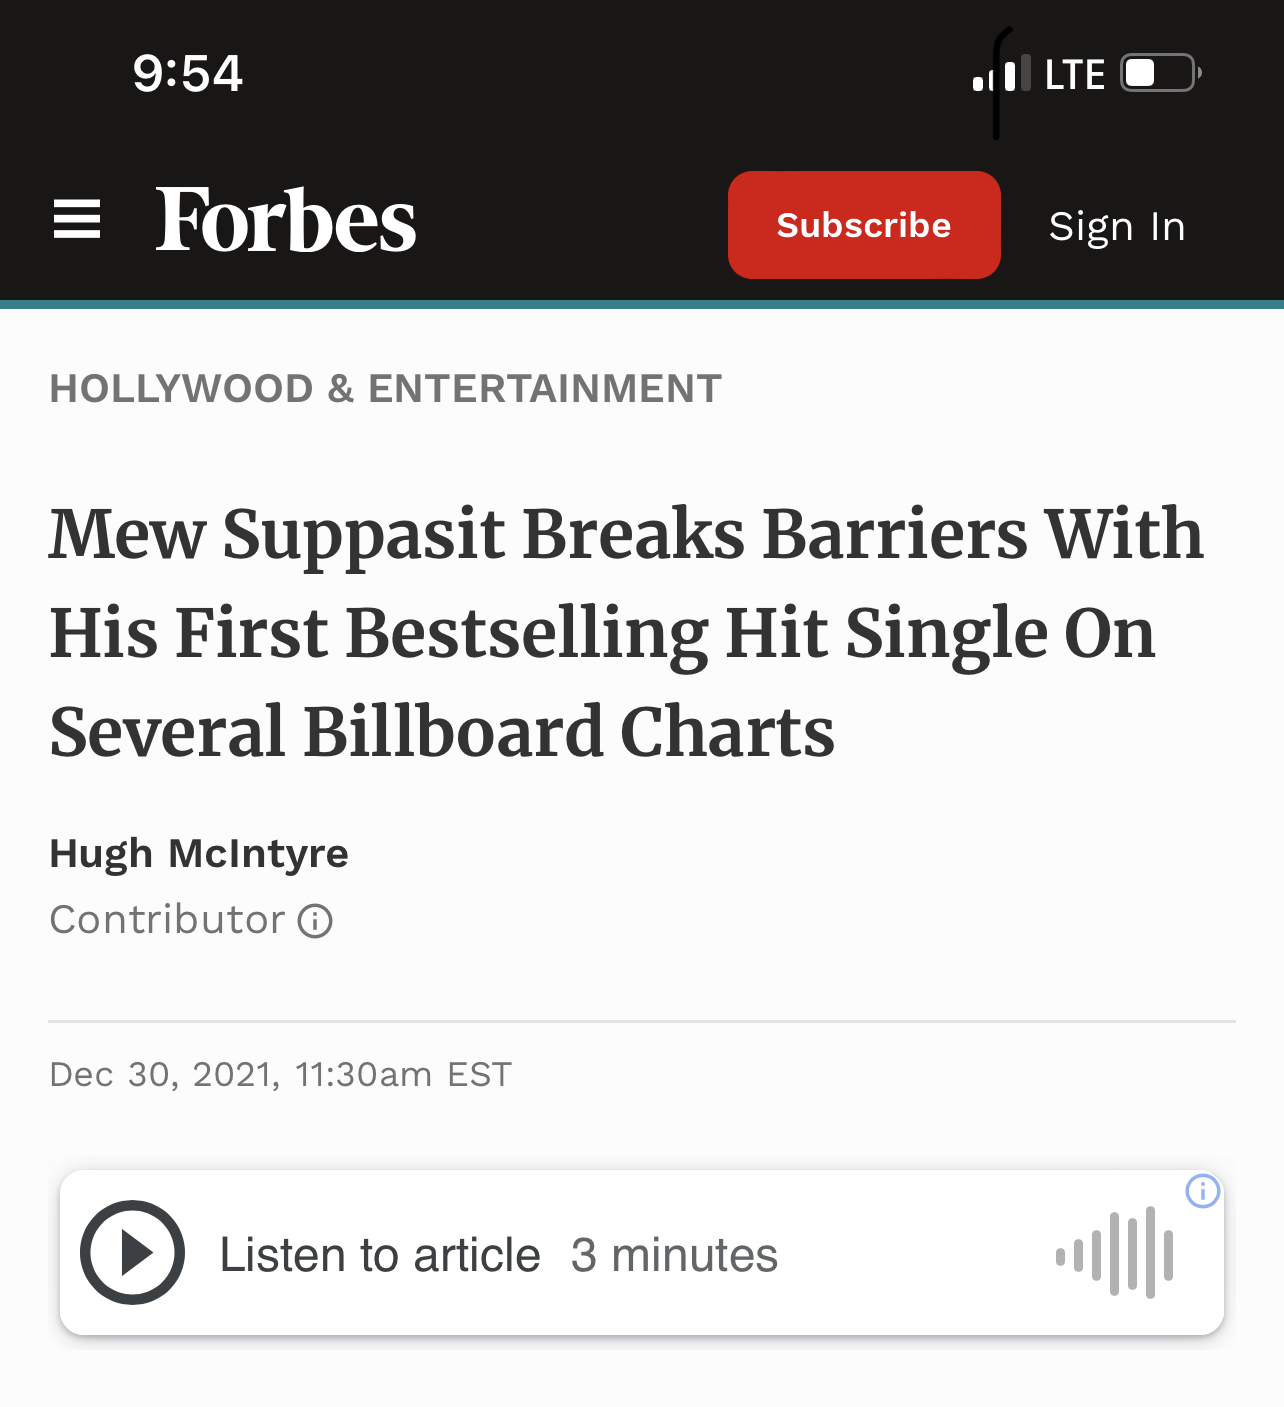 Forbes - December 30, 2021